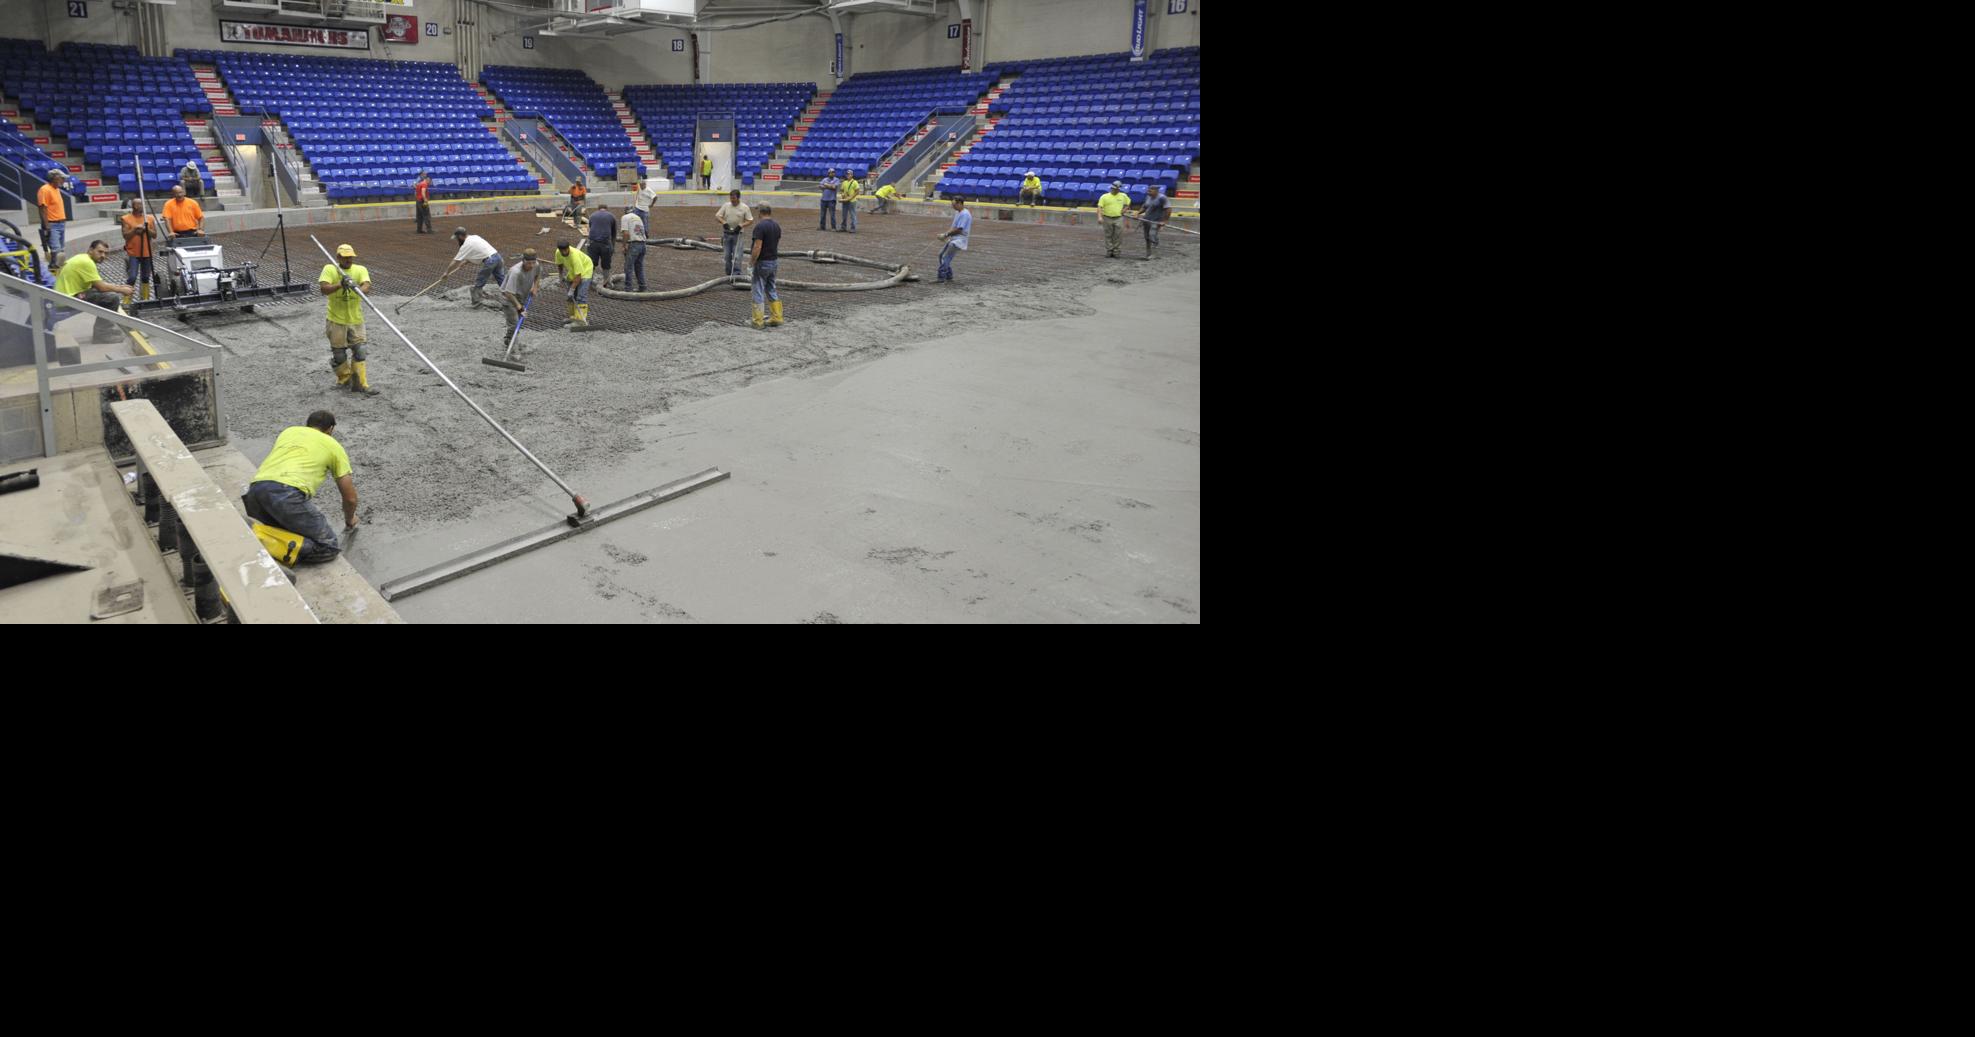 Lightning's arena to undergo more renovations